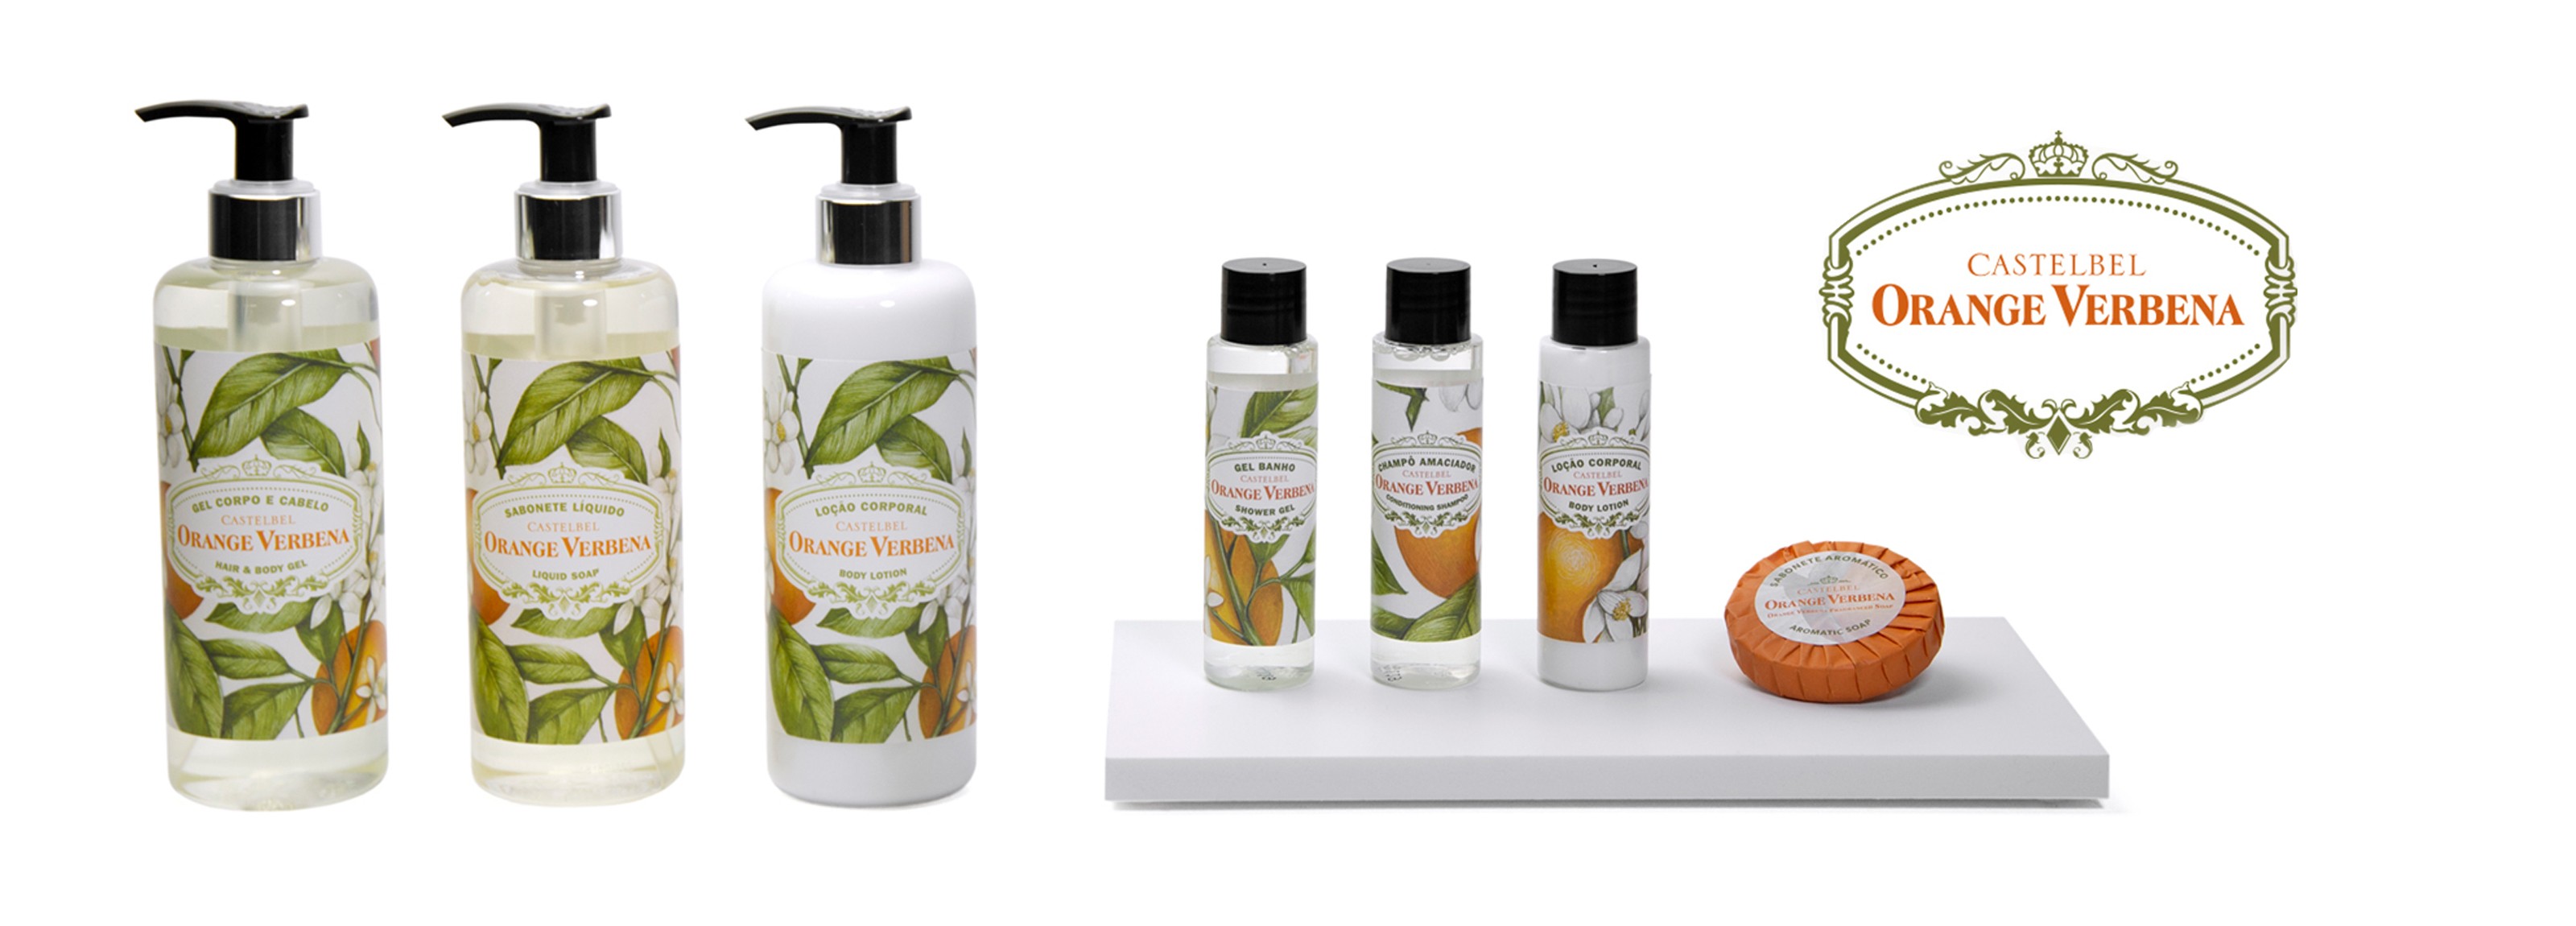 Castelbel Orange Verbena products in dispensers